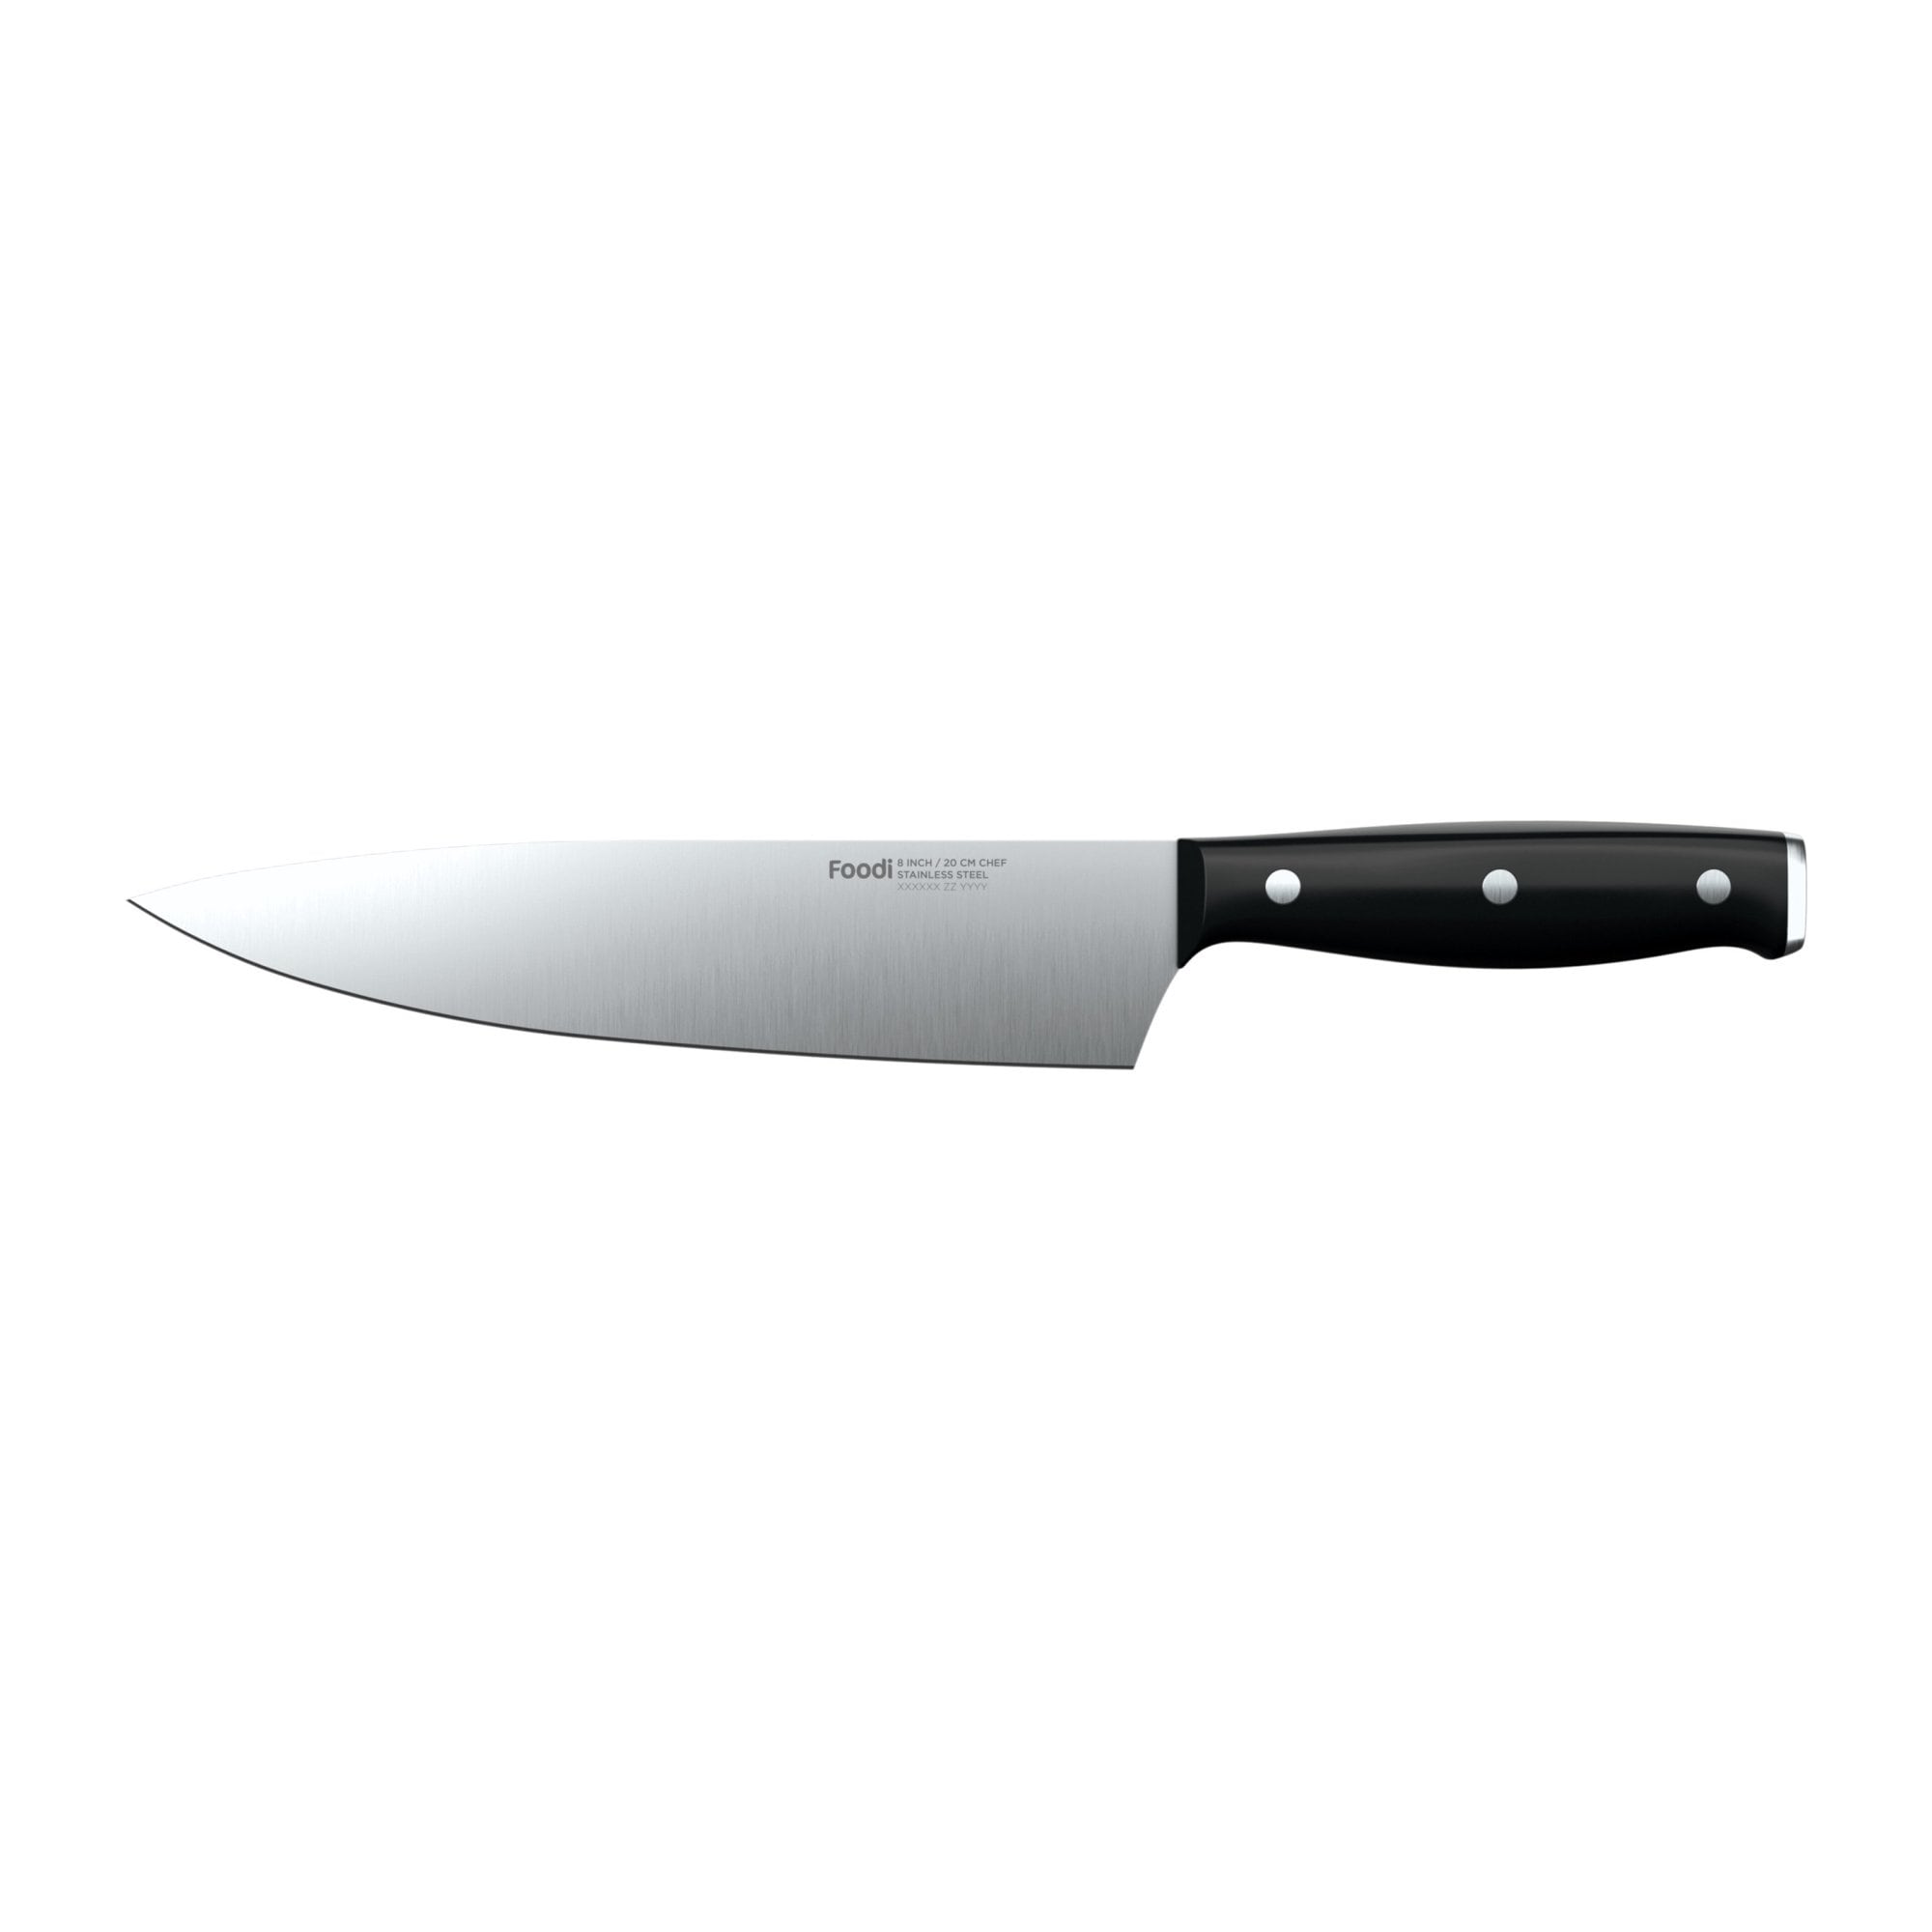 https://ak1.ostkcdn.com/images/products/is/images/direct/5ffdbed8c33a91d8f55f8dbfc237b00d3095cd51/Ninja-Foodi-Never-Dull-Essential-8%E2%80%9D-Chef-Knife.jpg